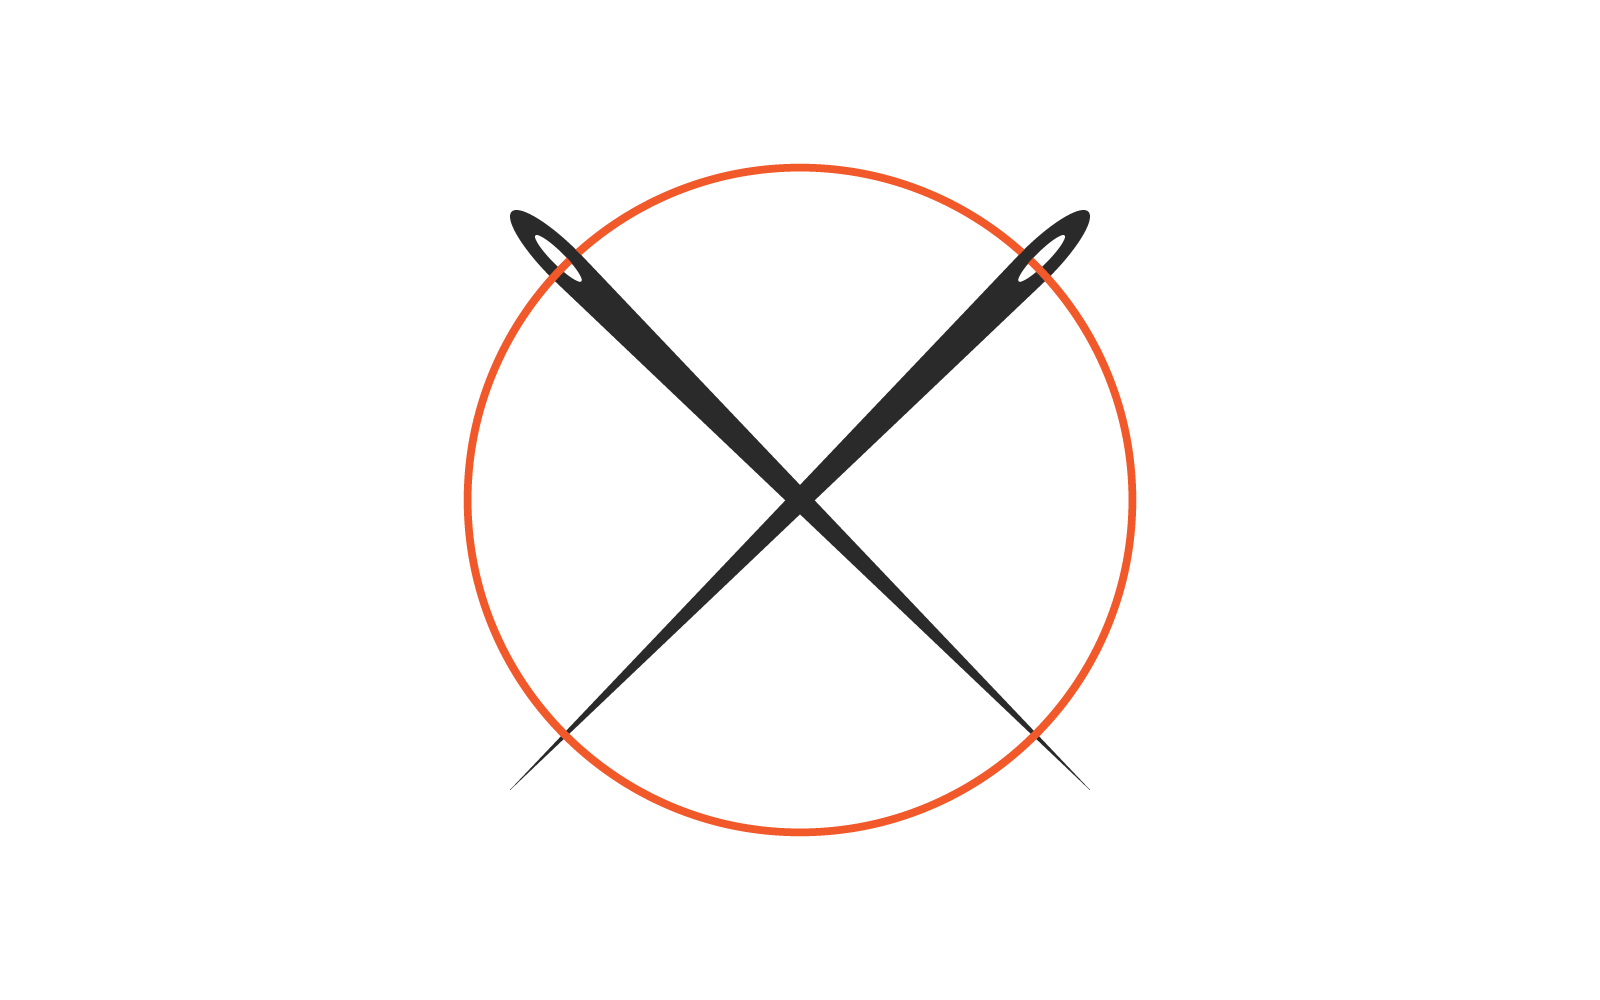 Thread needle illustration vector design